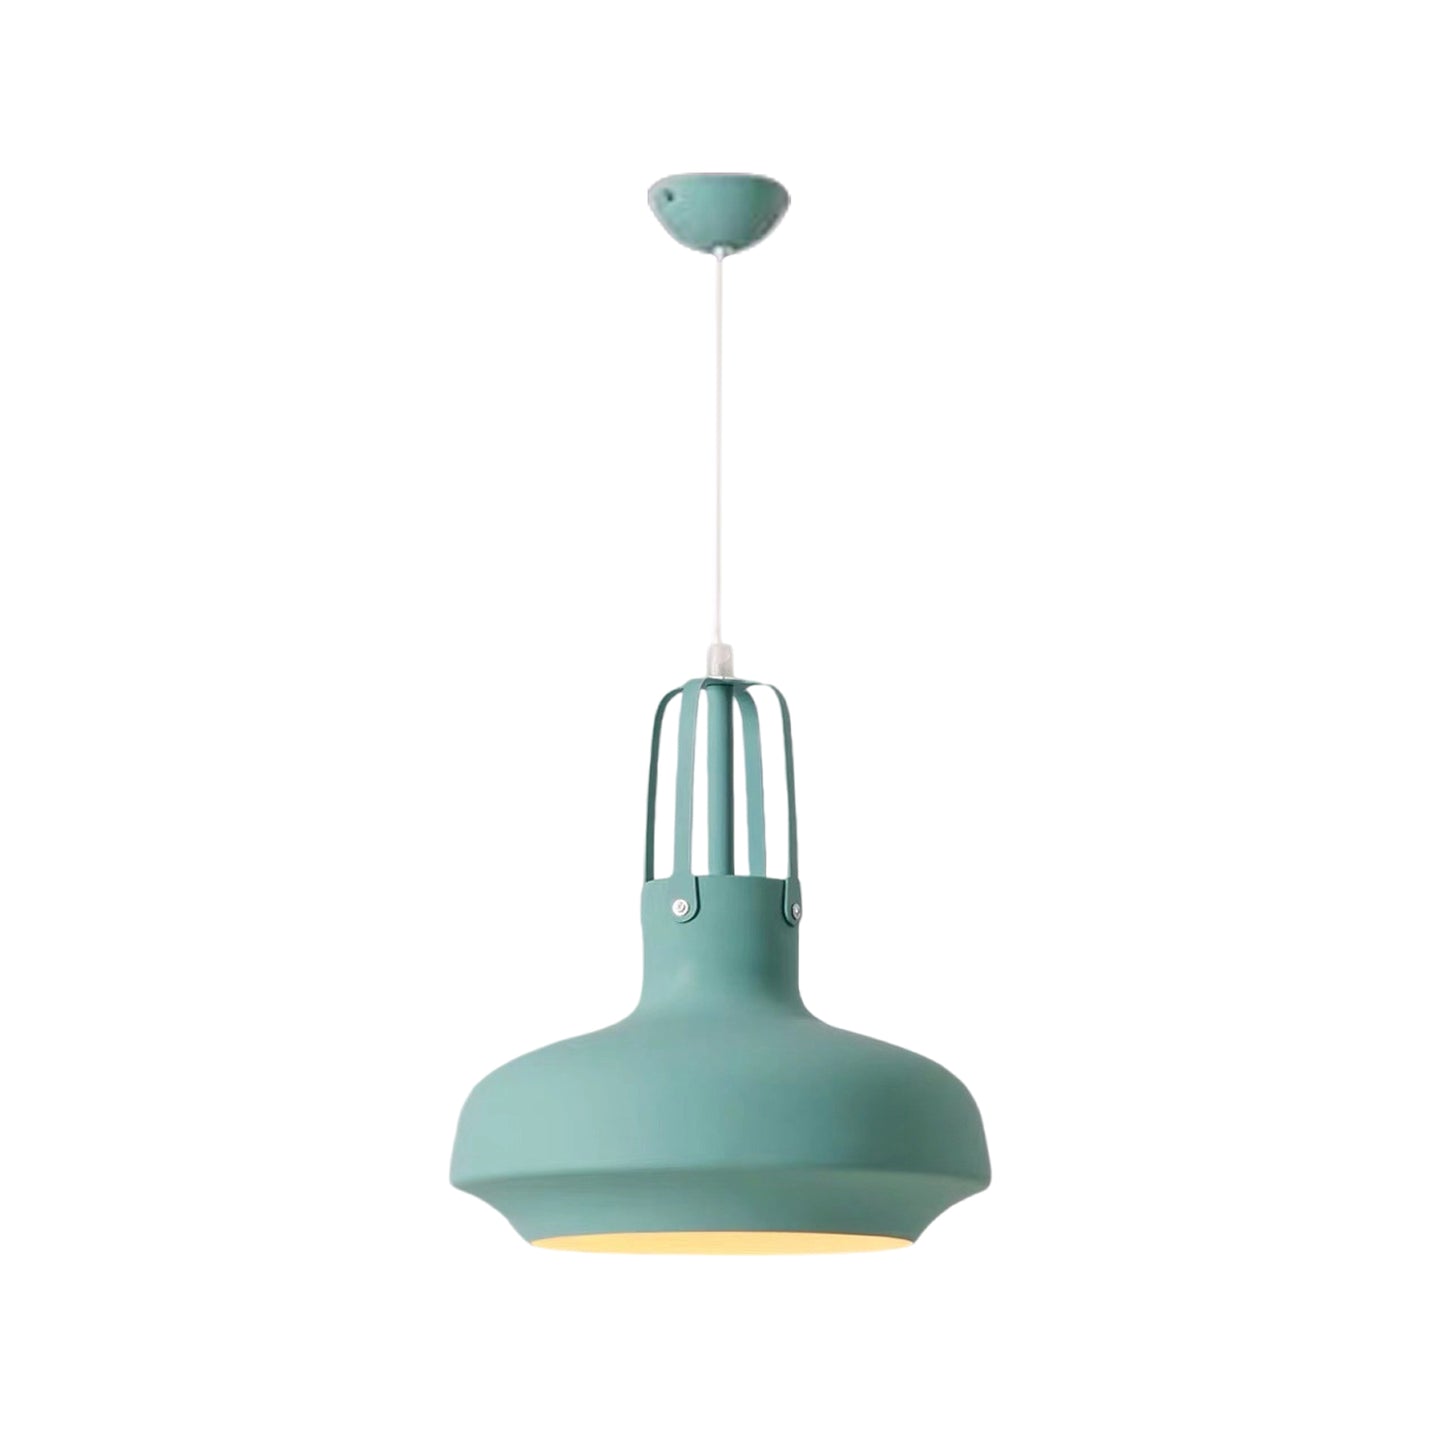 (N) ARTURESTHOME Scandinavian Simple Macaron Decorative Lamp Creative LED Pendant Lights